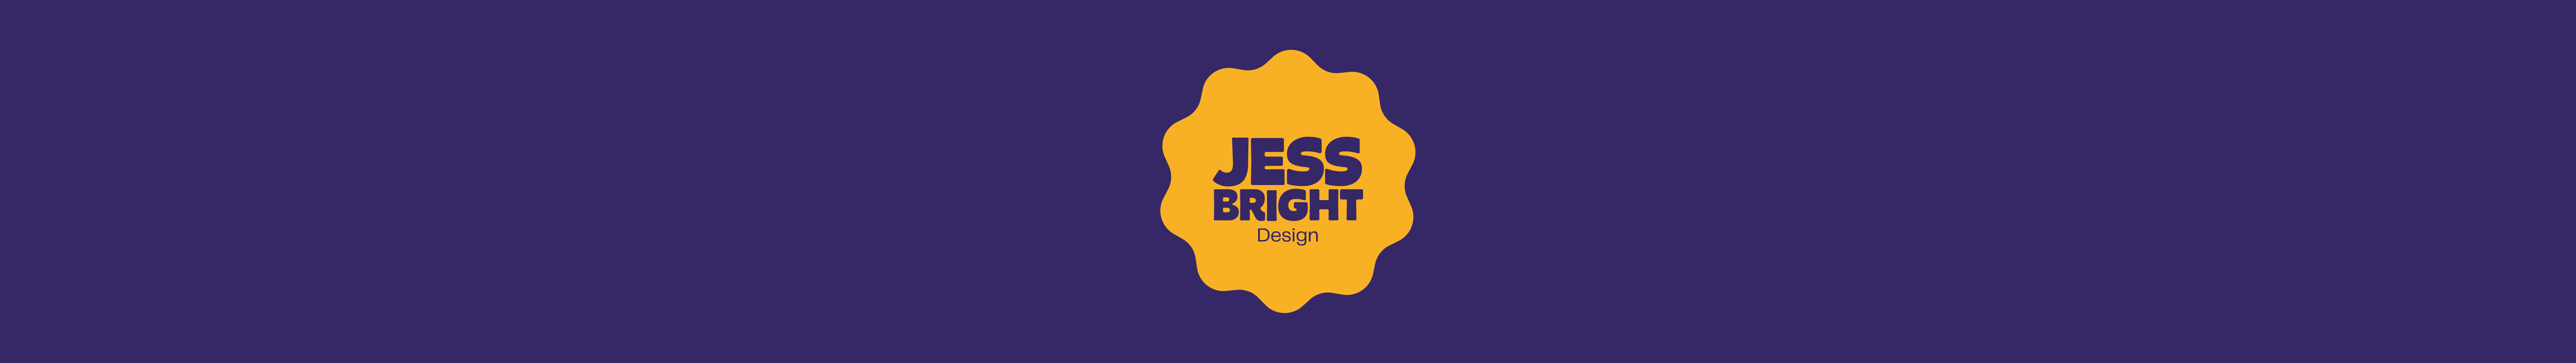 Jess Bright のプロファイルバナー